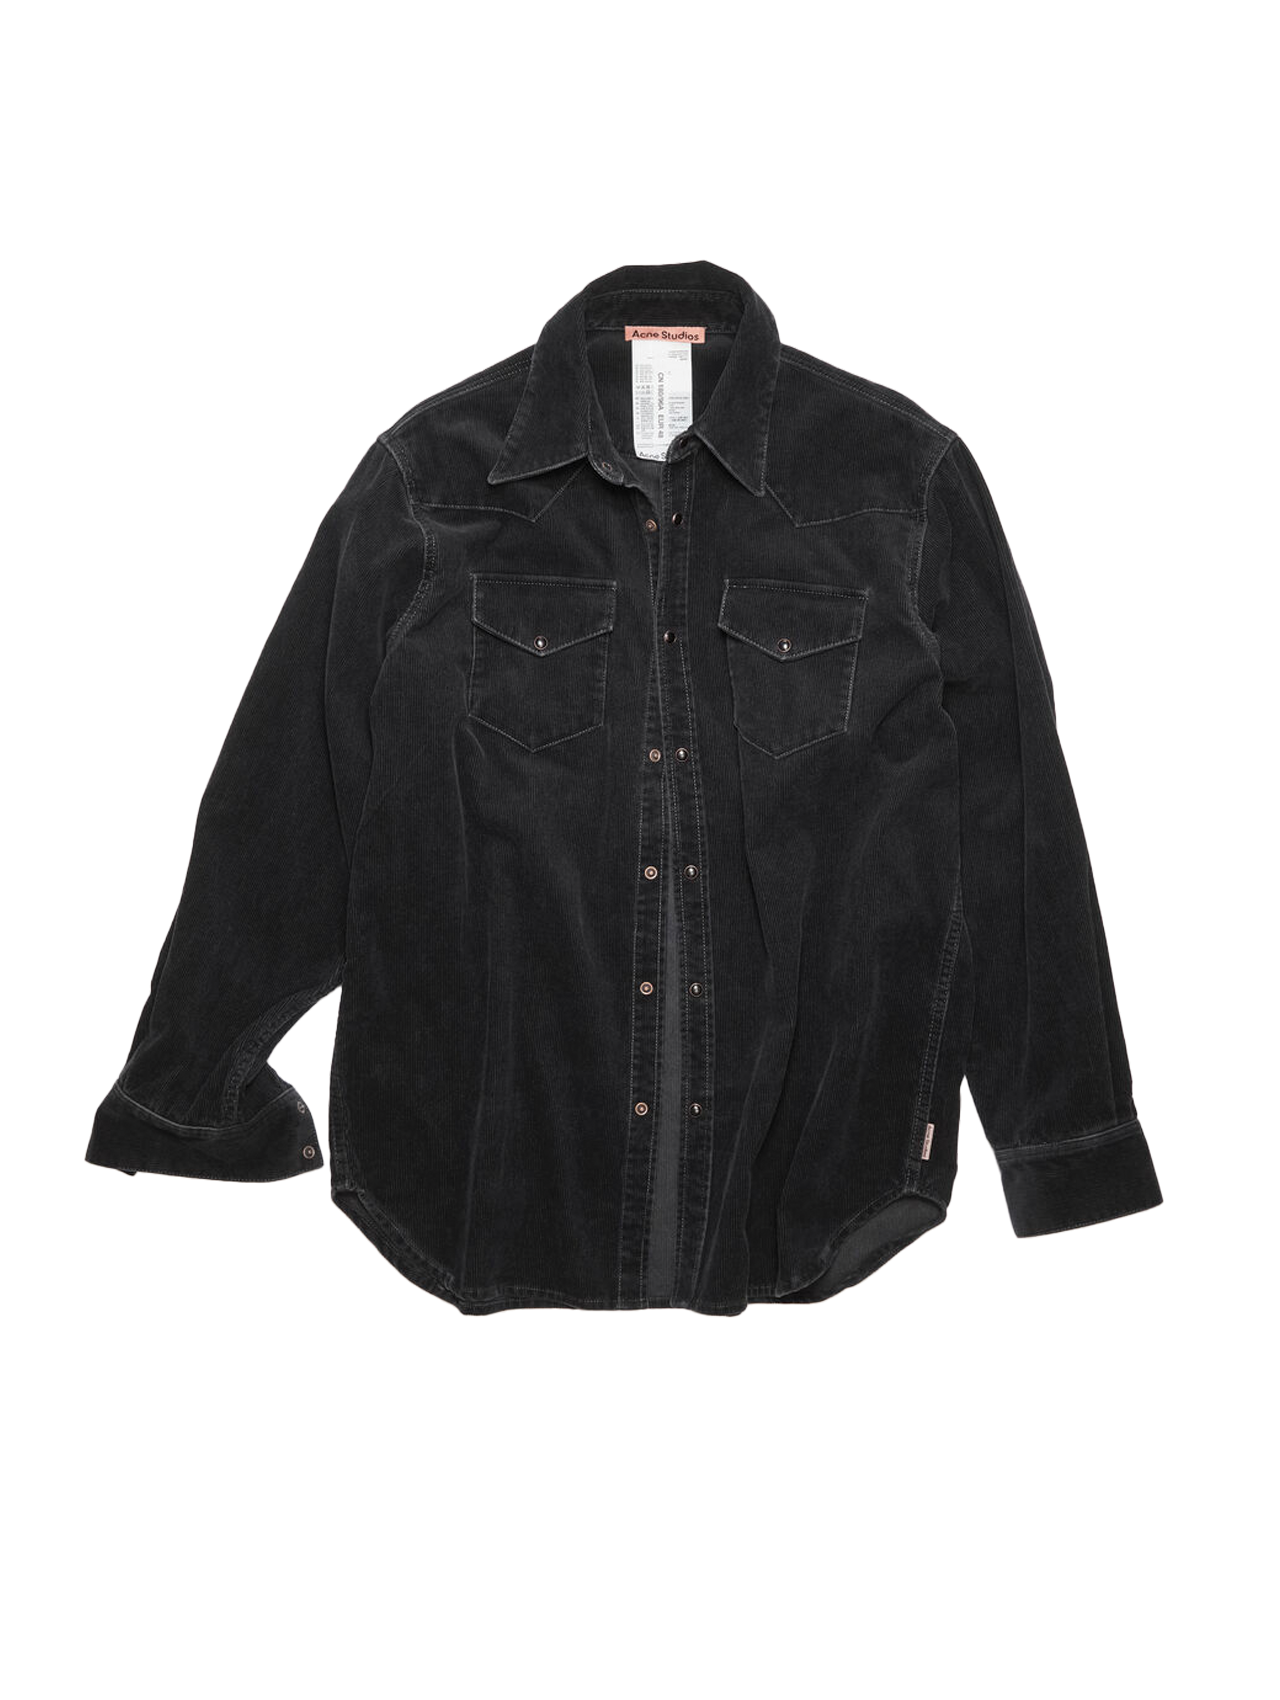 Acne Studios Black Corduroy Button Up Shirt